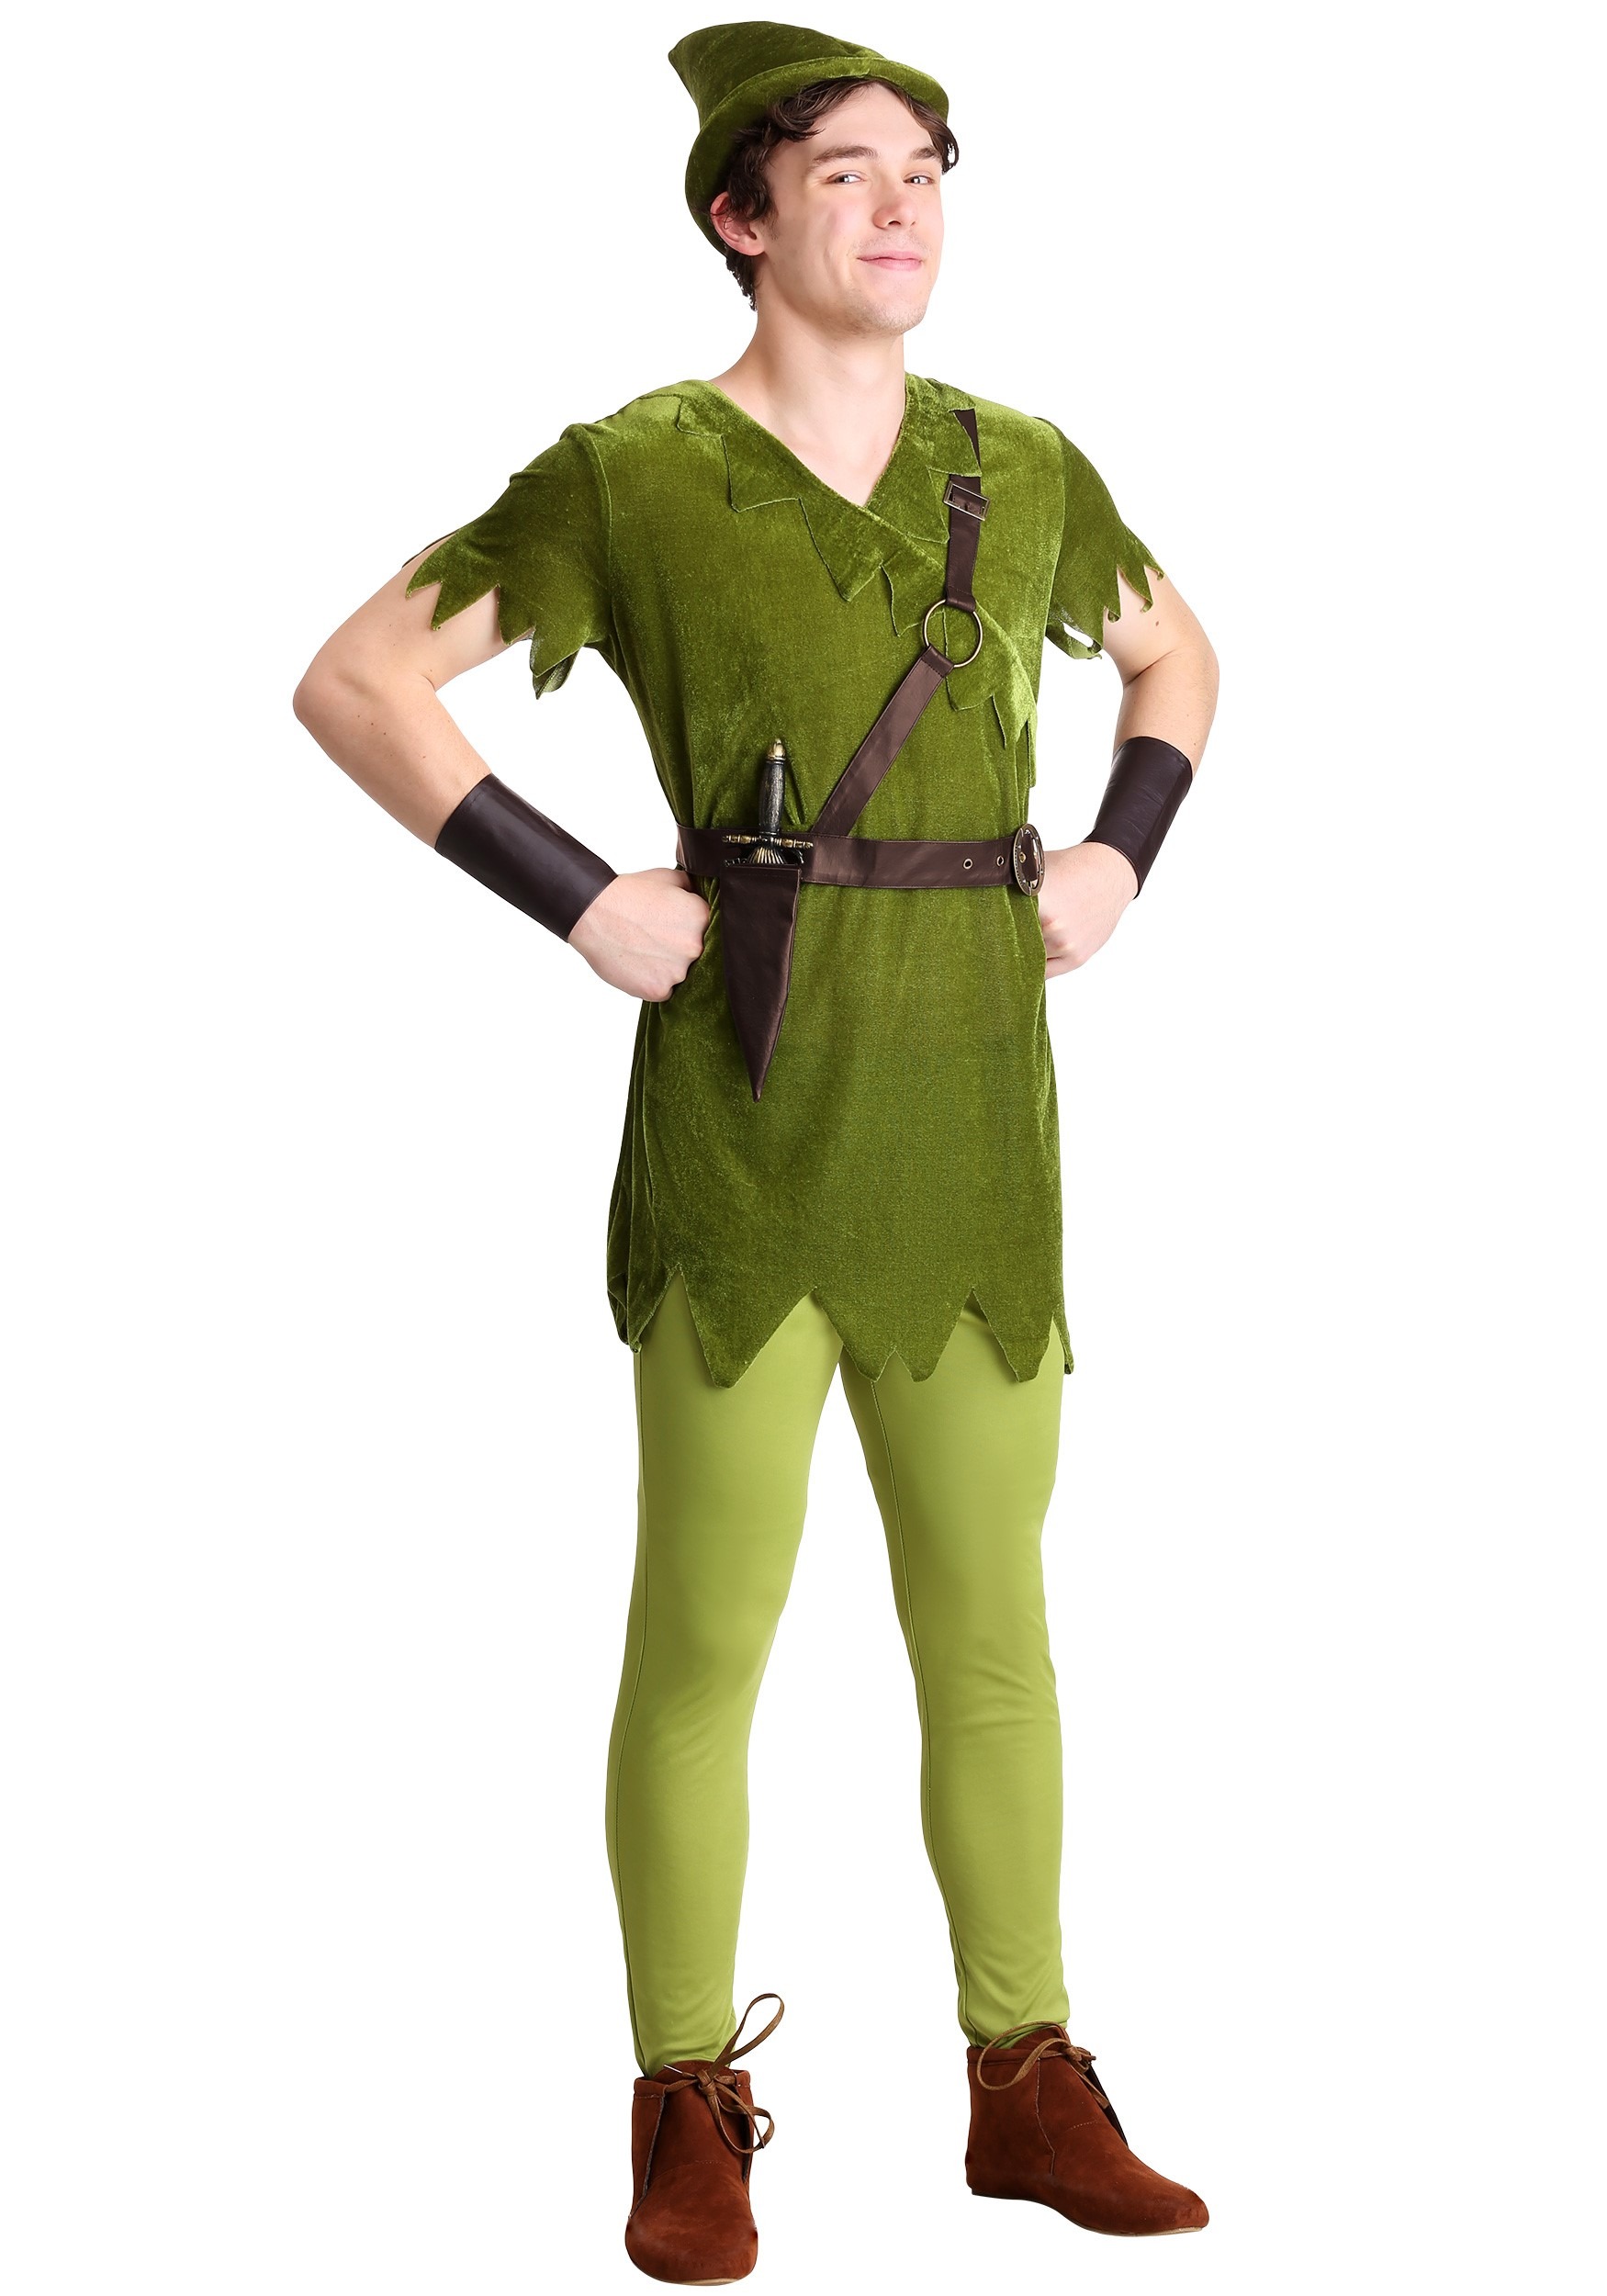 Plus Size Men’s Classic Peter Pan Costume